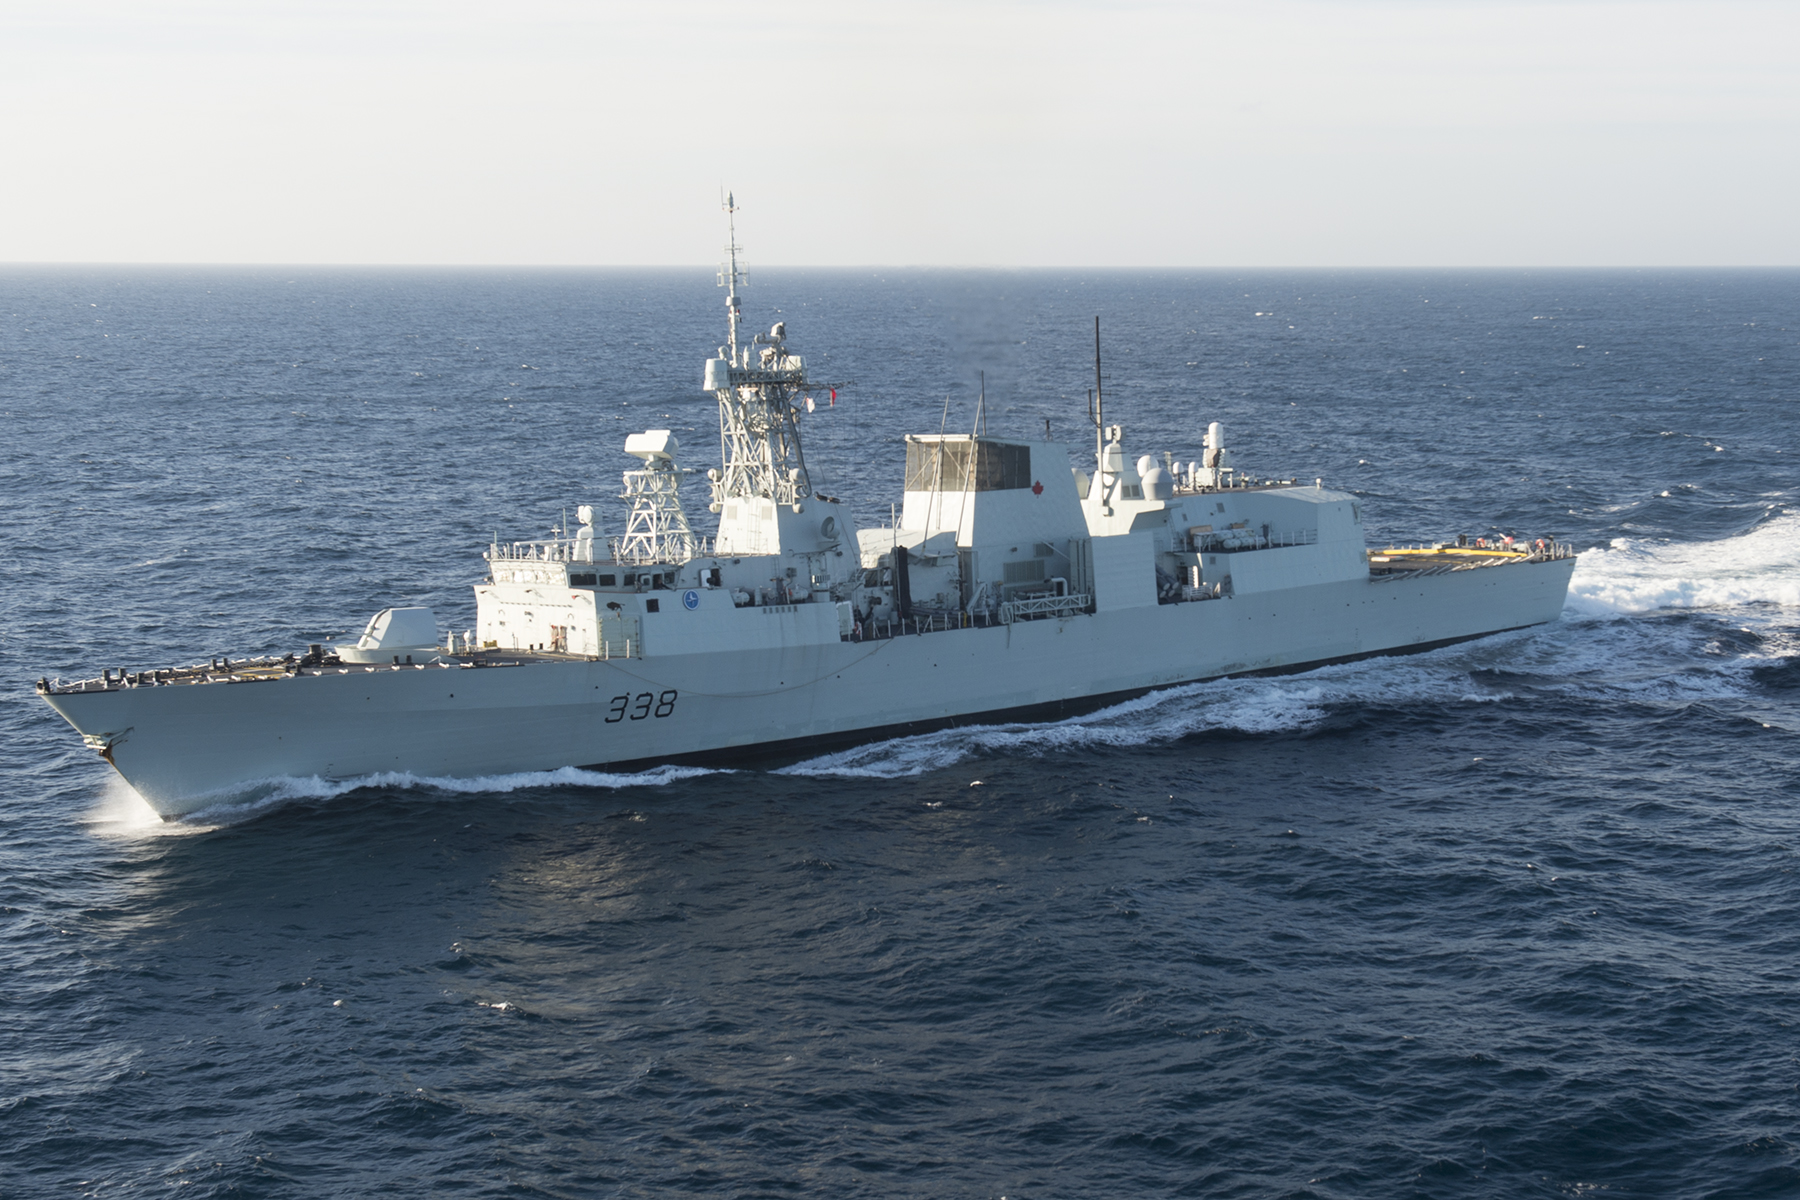 HMCS Winnipeg